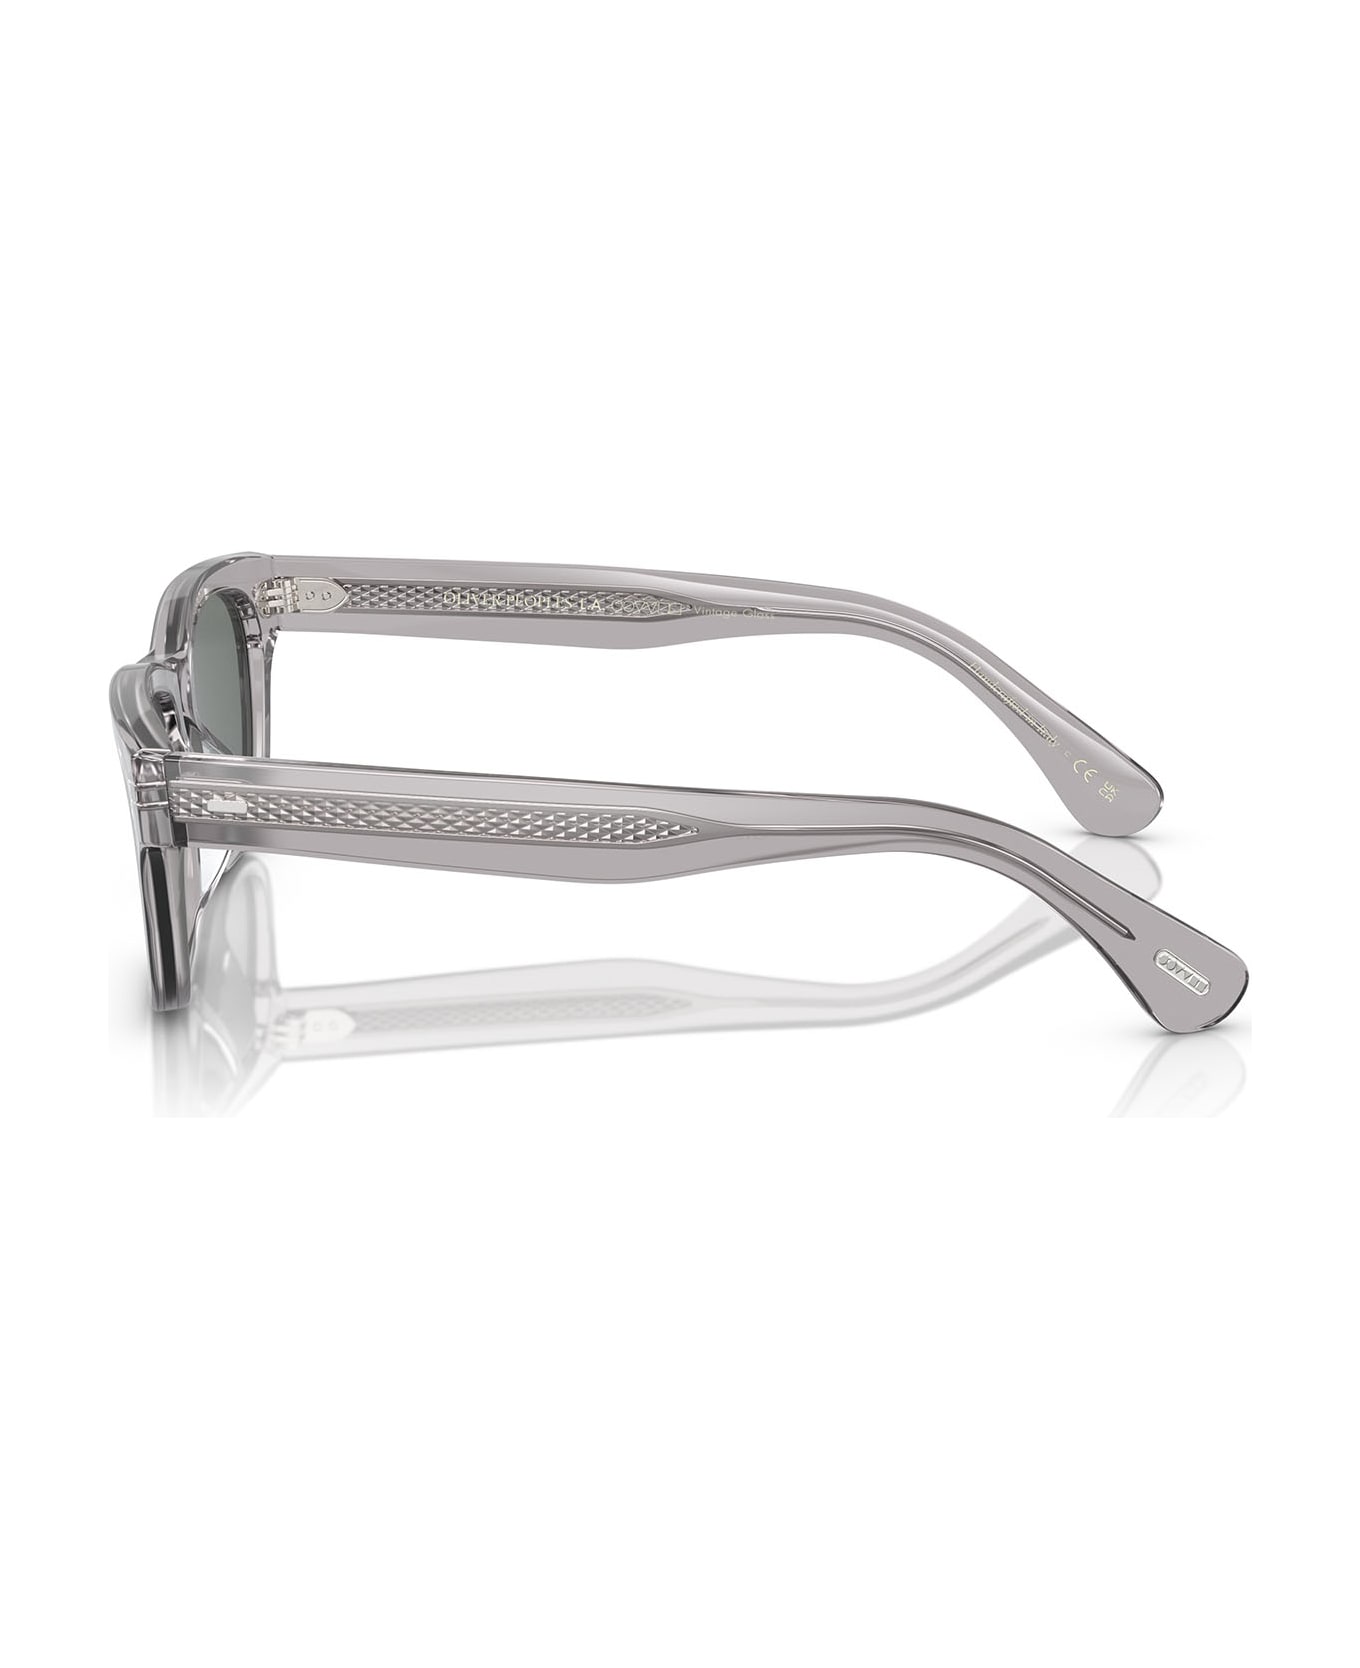 Oliver Peoples Ov5540su Workman Grey Sunglasses - Workman Grey